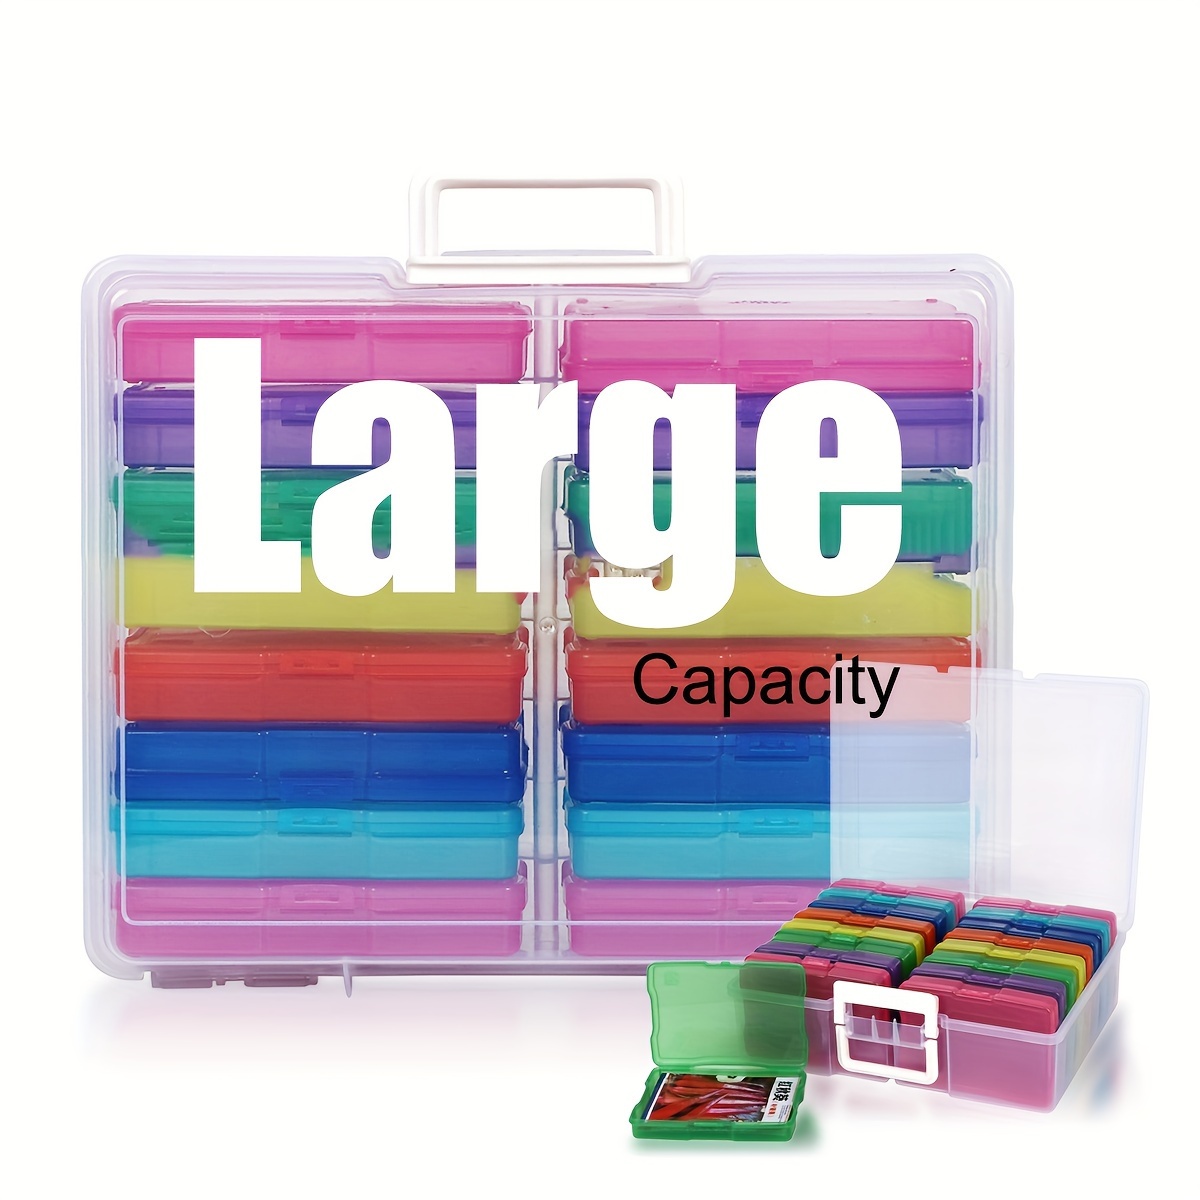 4x6 Inch Desktop File Greeting Card File Classification Organize  Transparent Plastic Storage Box Photo Storage Plastic Box